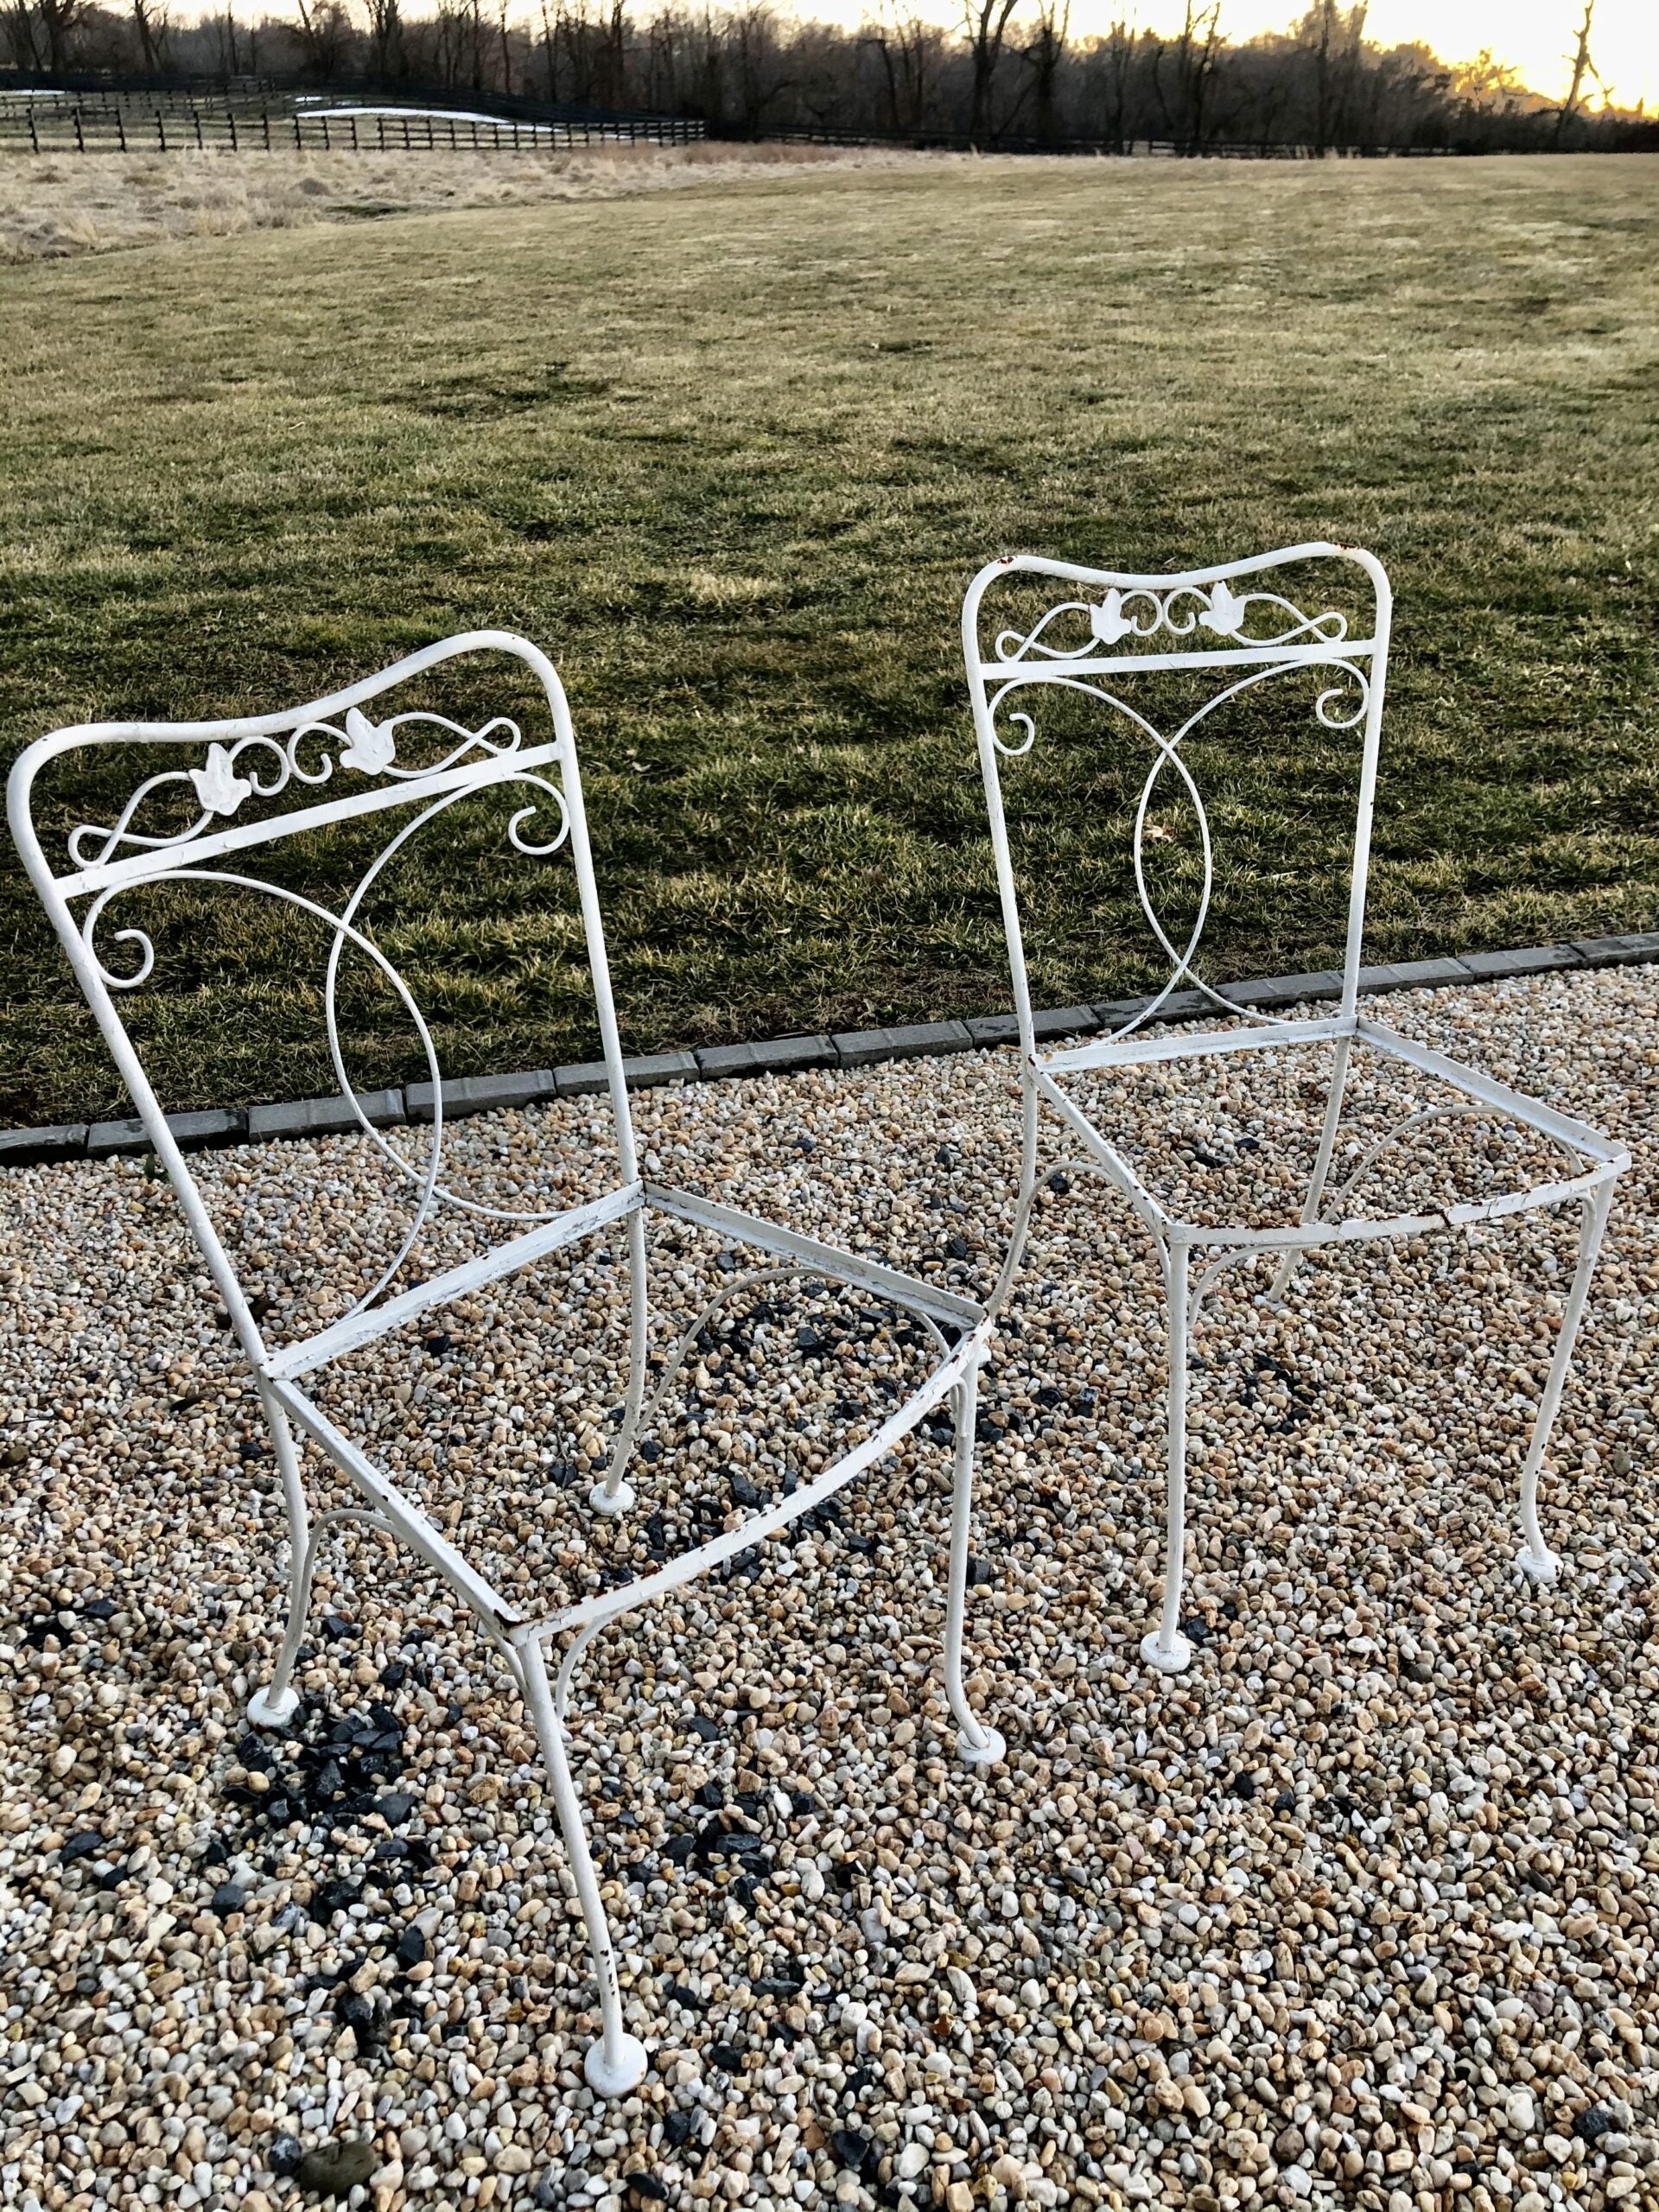 White Metal Chairs